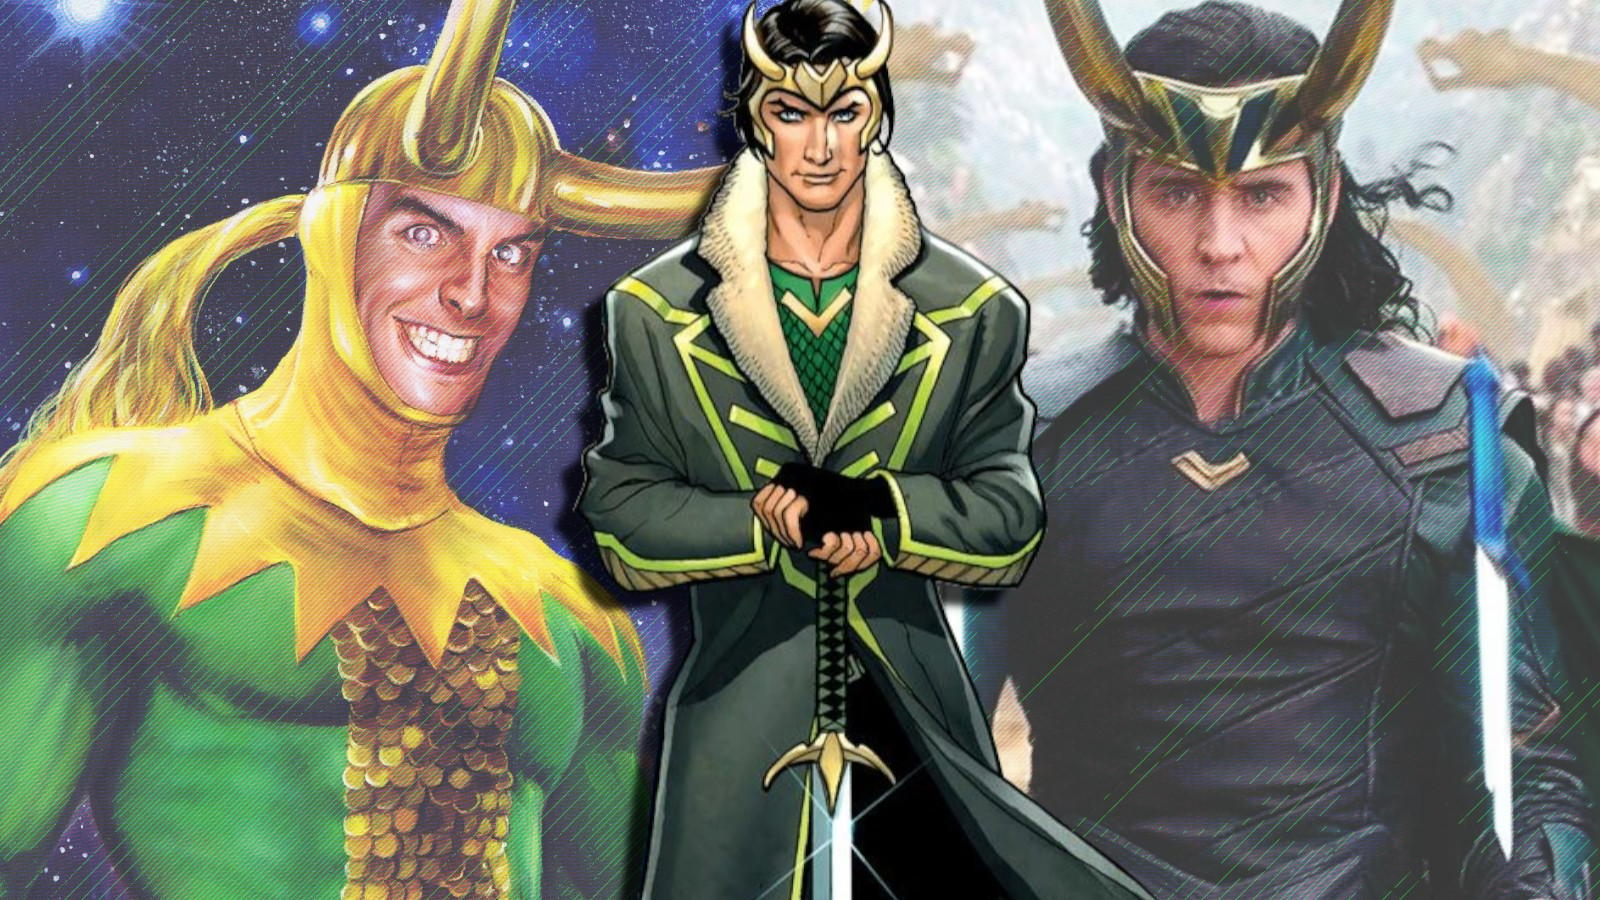 Loki as he appears in the comics and MCU